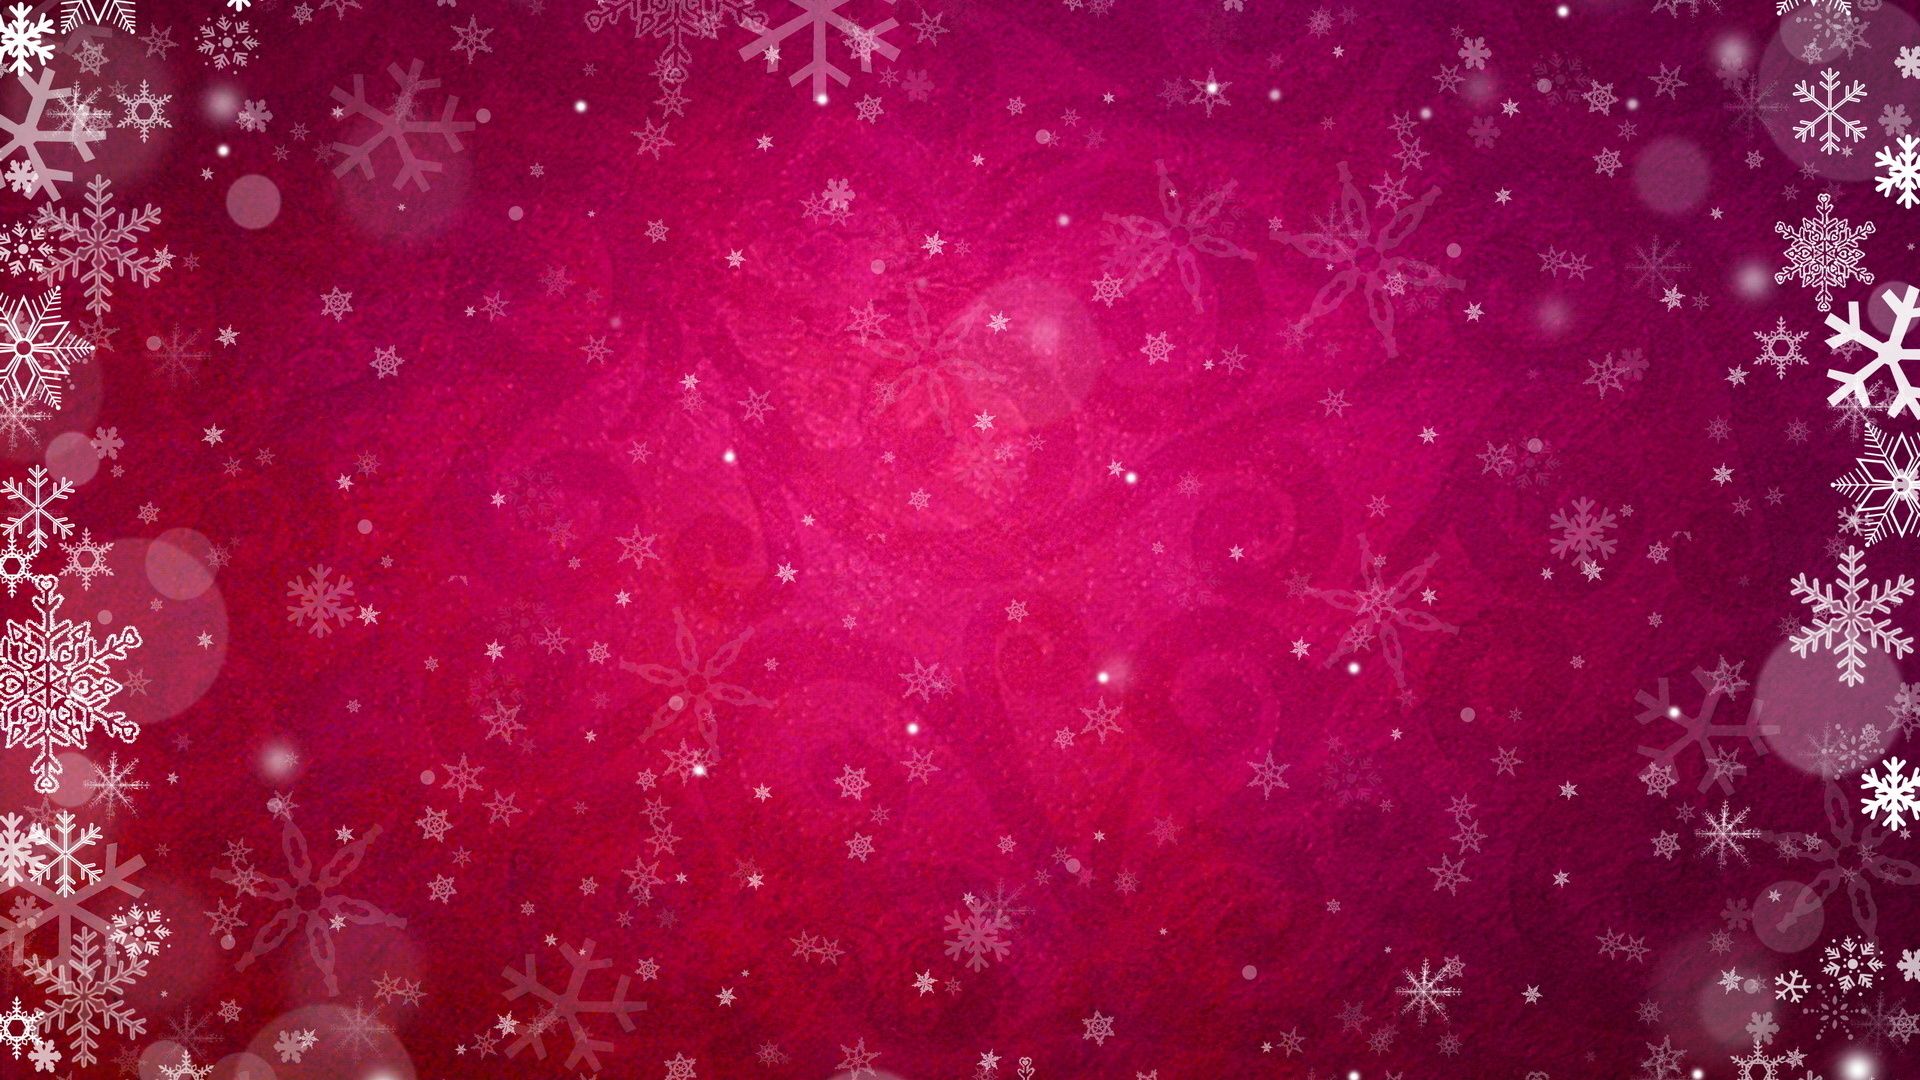 Pink, Snowflakes, Frosty Uzzory